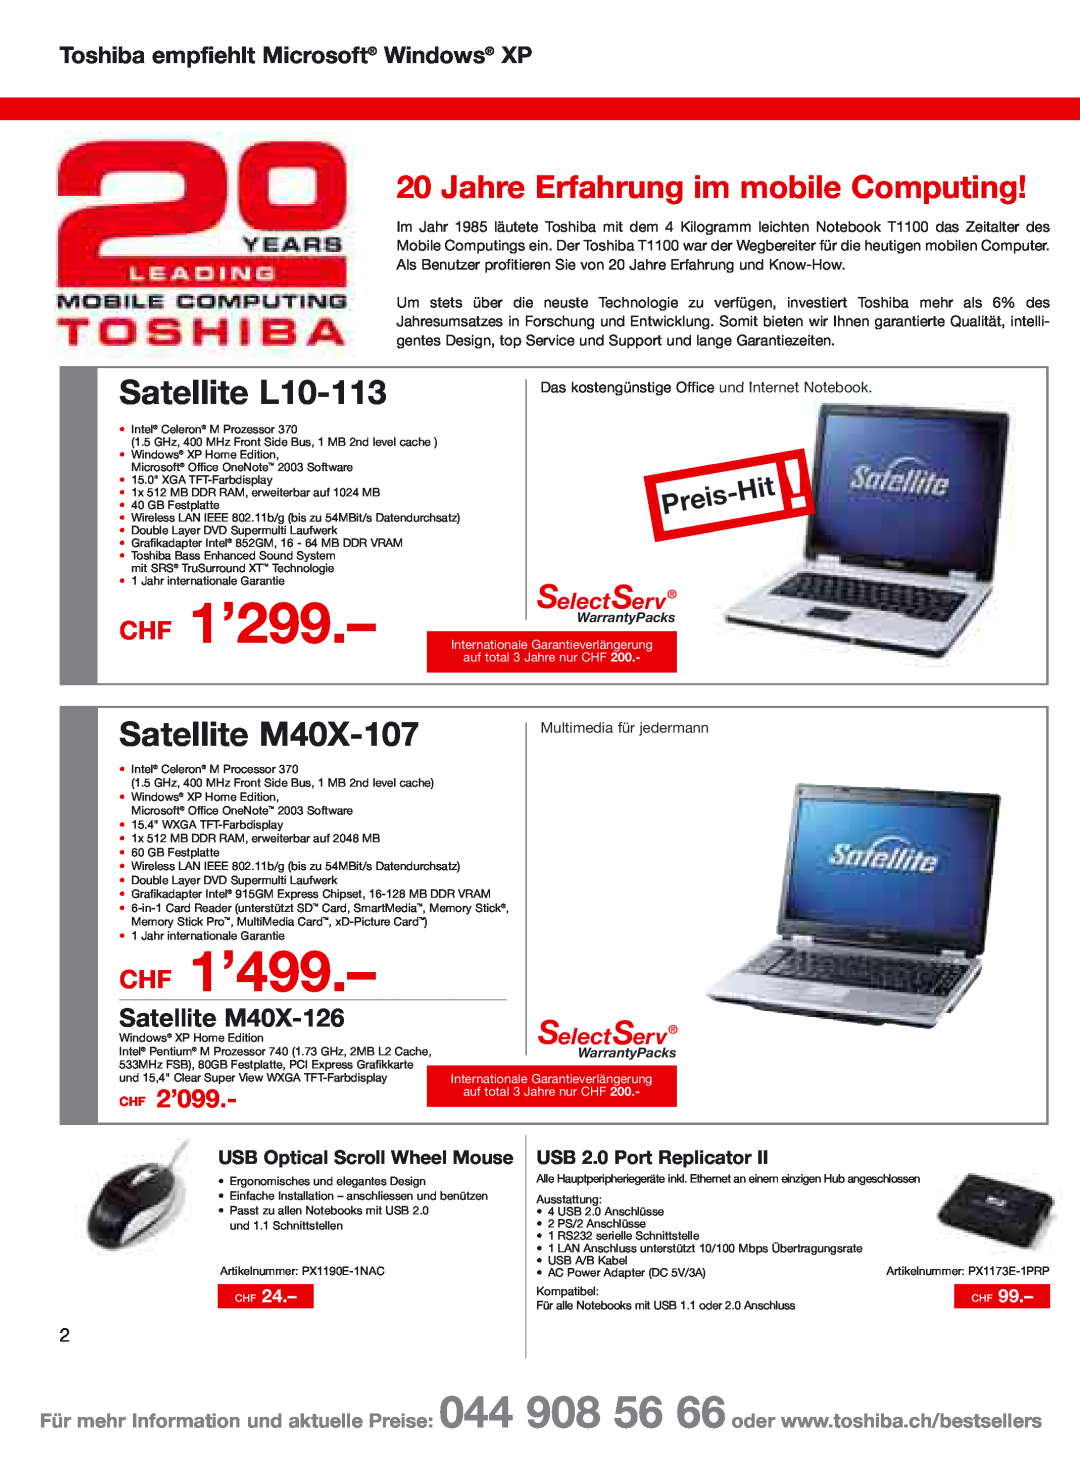 Toshiba Portg R200 CHF 1’299, CHF 1’499, Satellite L10-113, Satellite M40X-107, Jahre Erfahrung im mobile Computing, 2’099 